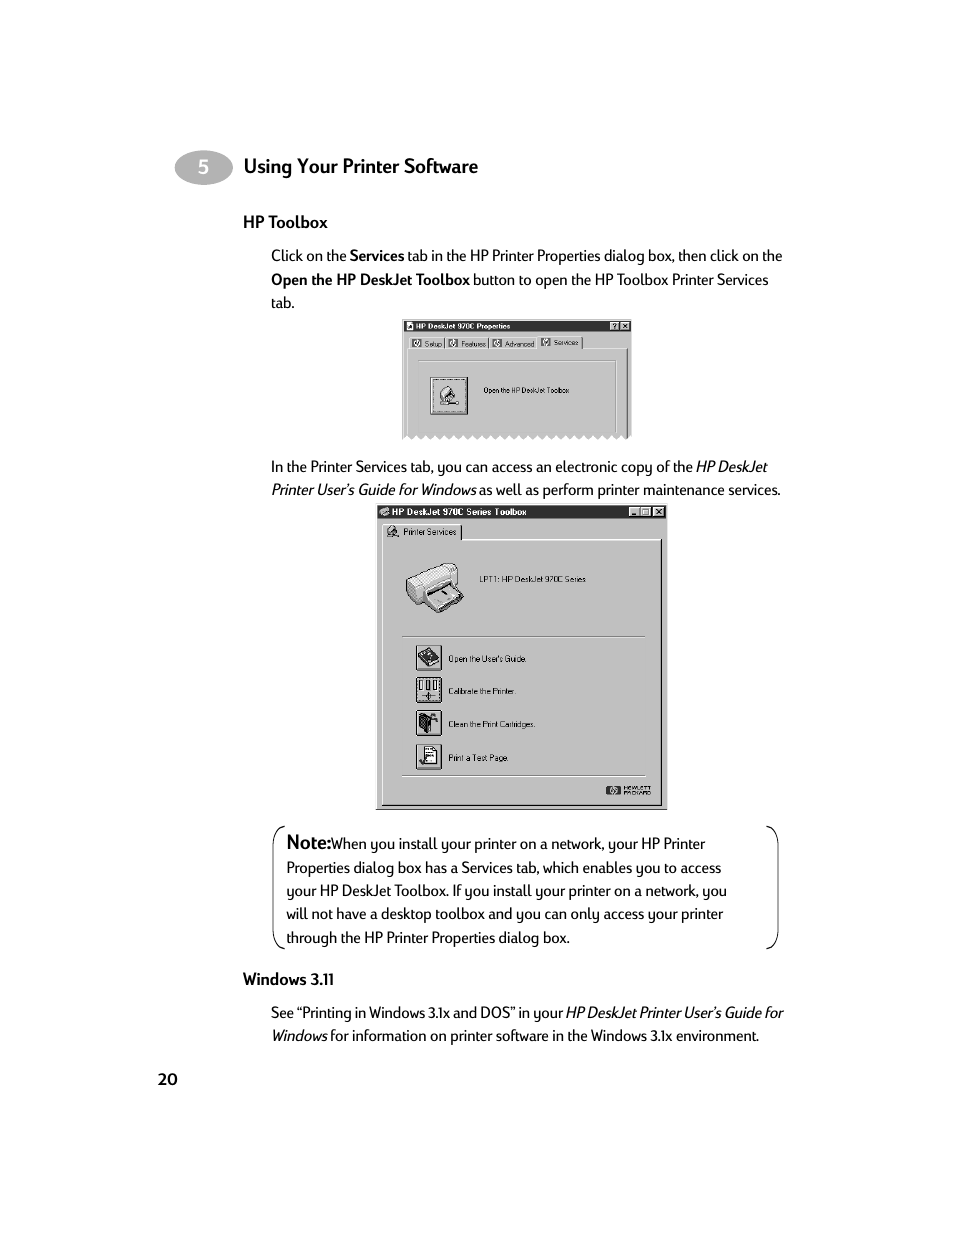 Hp toolbox windows 3.11 | HP Deskjet 970cxi Printer User Manual | Page 22 /  24 | Original mode